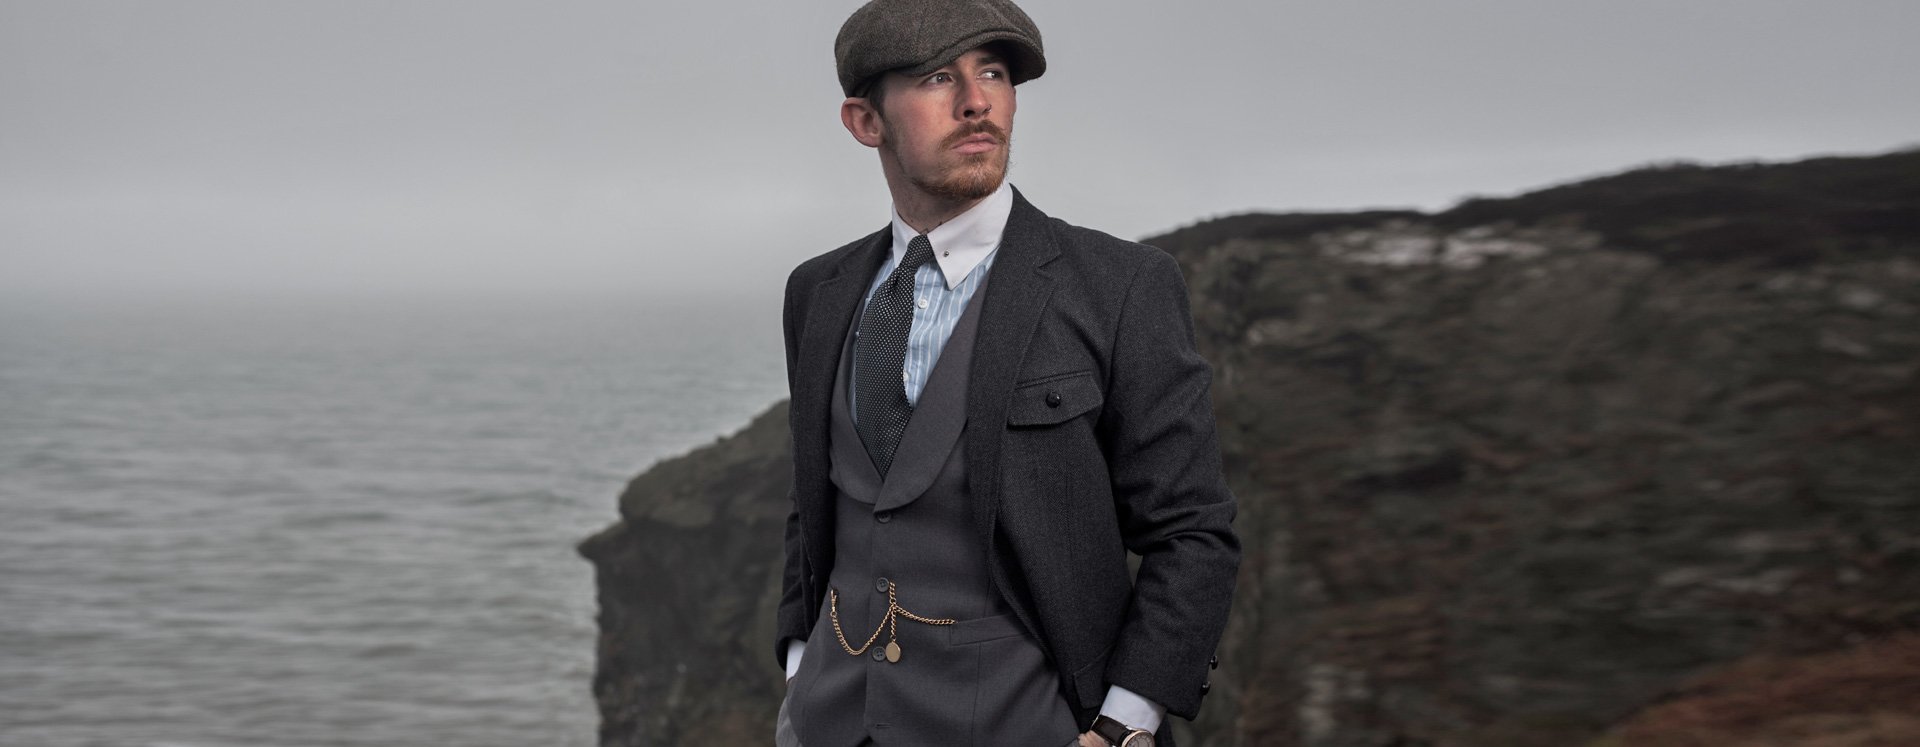 Mens Wedding Suits Ireland / The Coolest Tweed Groom Style